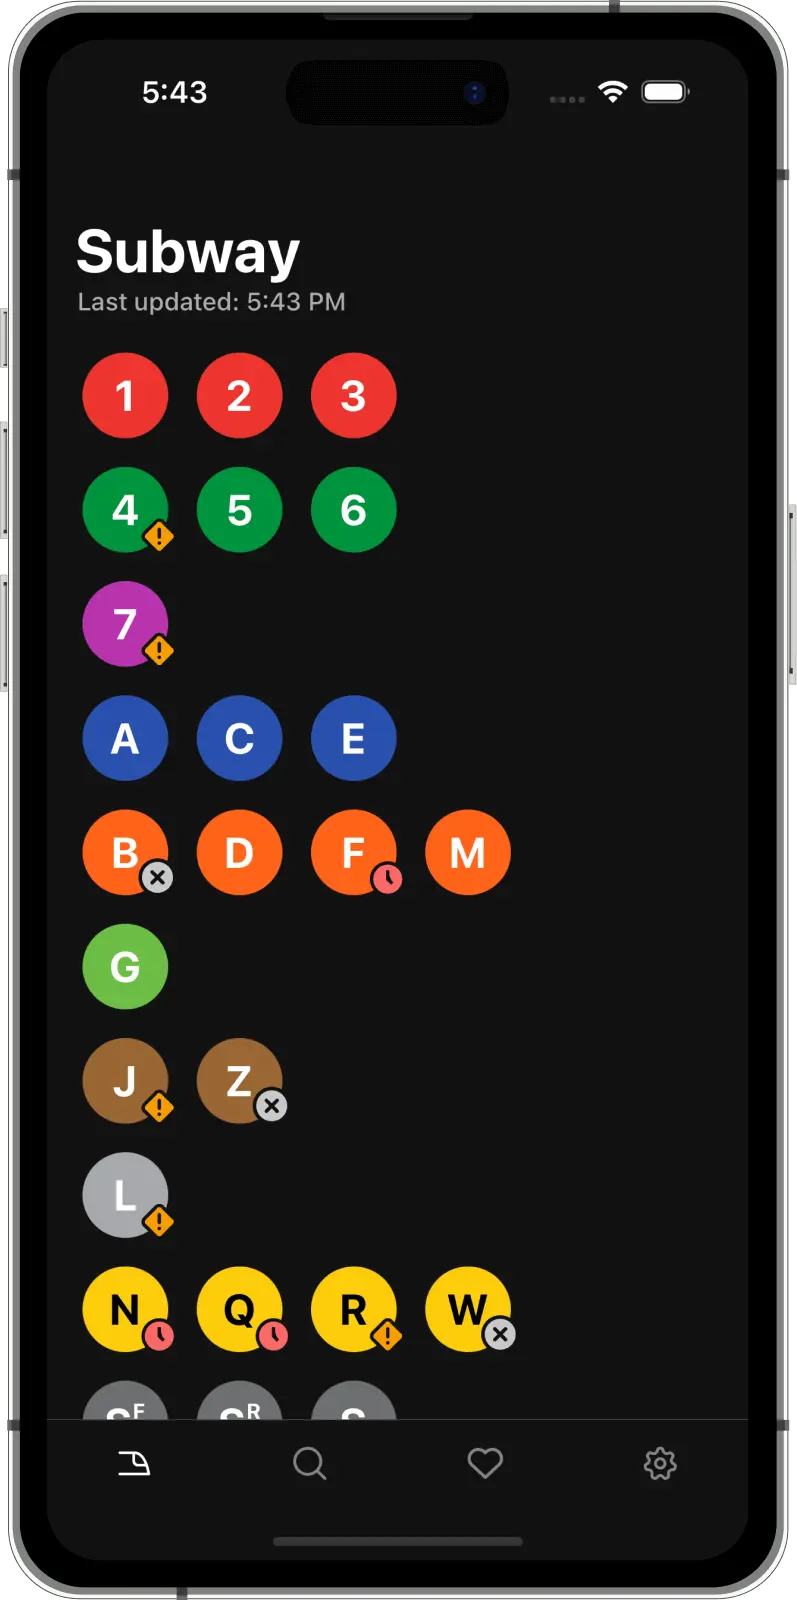 Image of the main Turnstile - NYC MTA app screen